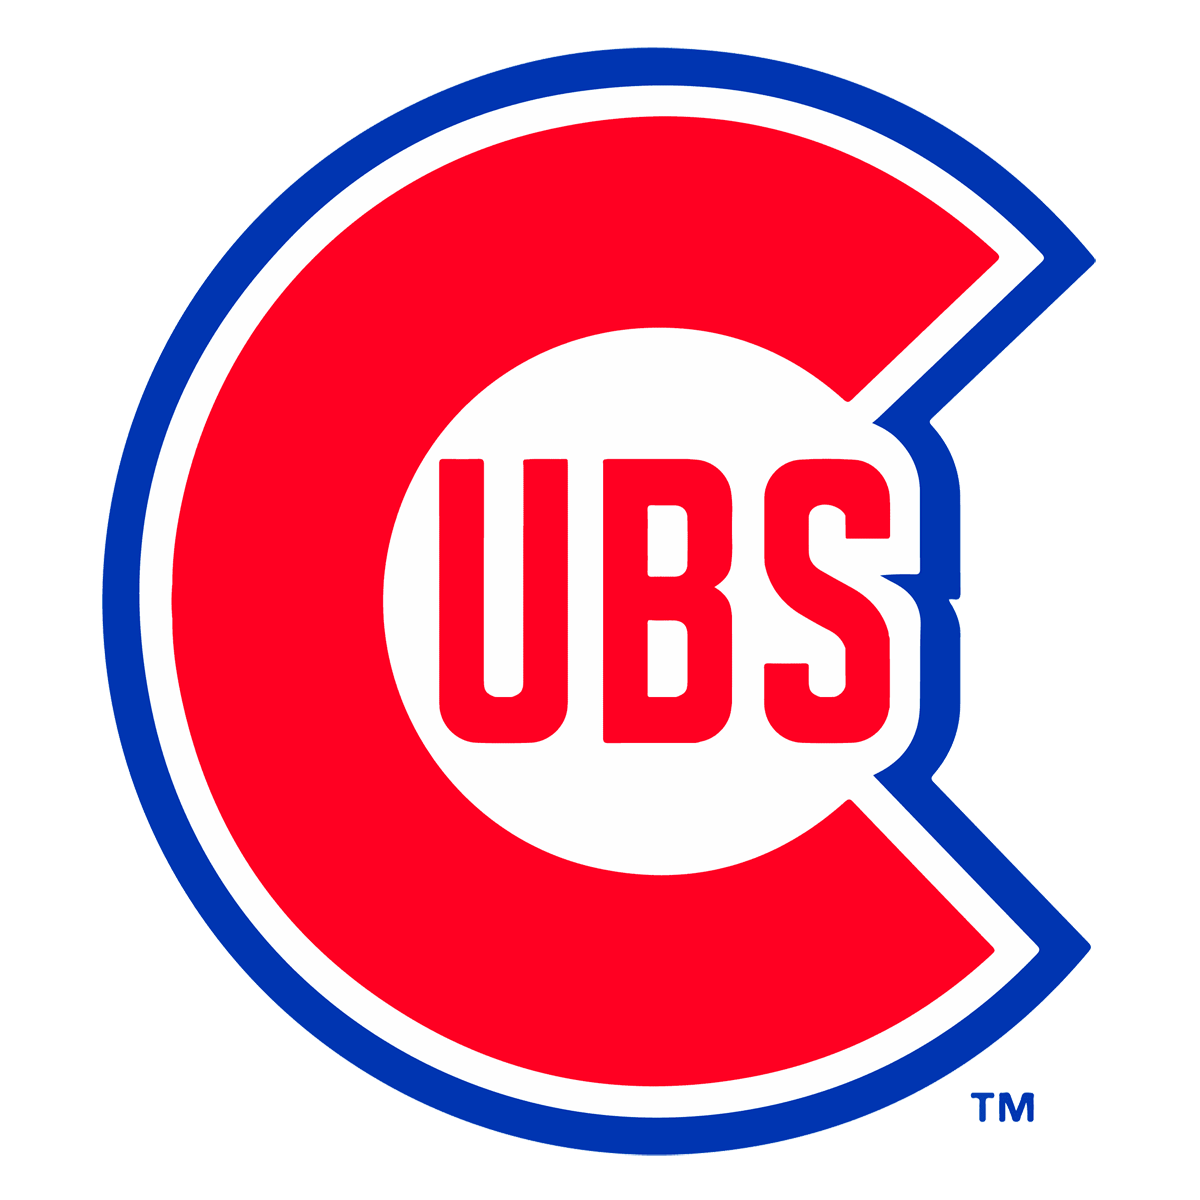 Chicago Cubs logo 1946-1947